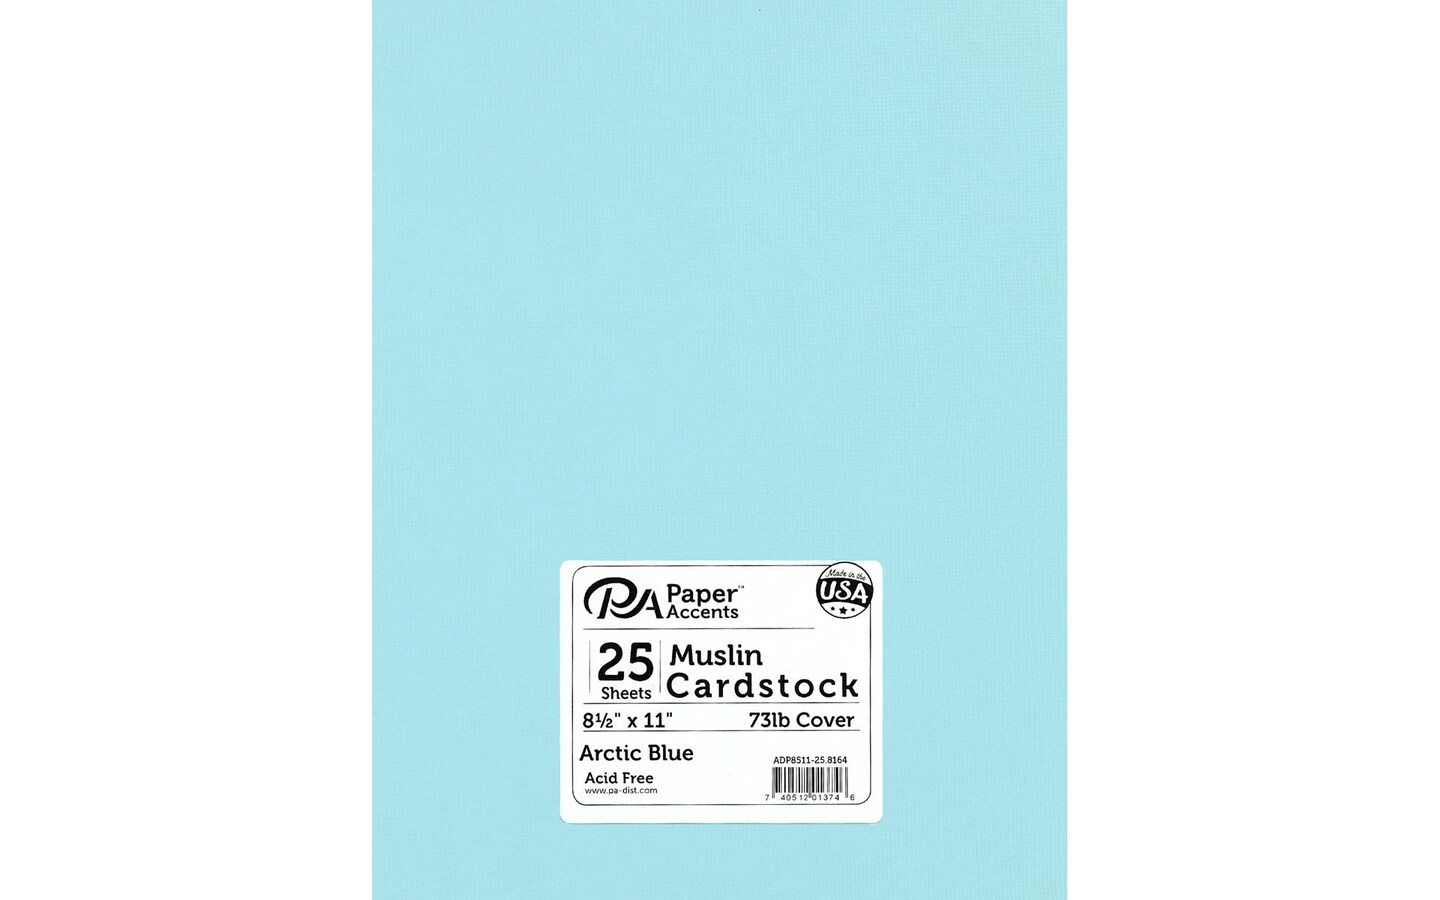 PA Paper Accents Muslin Cardstock 8.5 x 11 Arctic Blue, 73lb